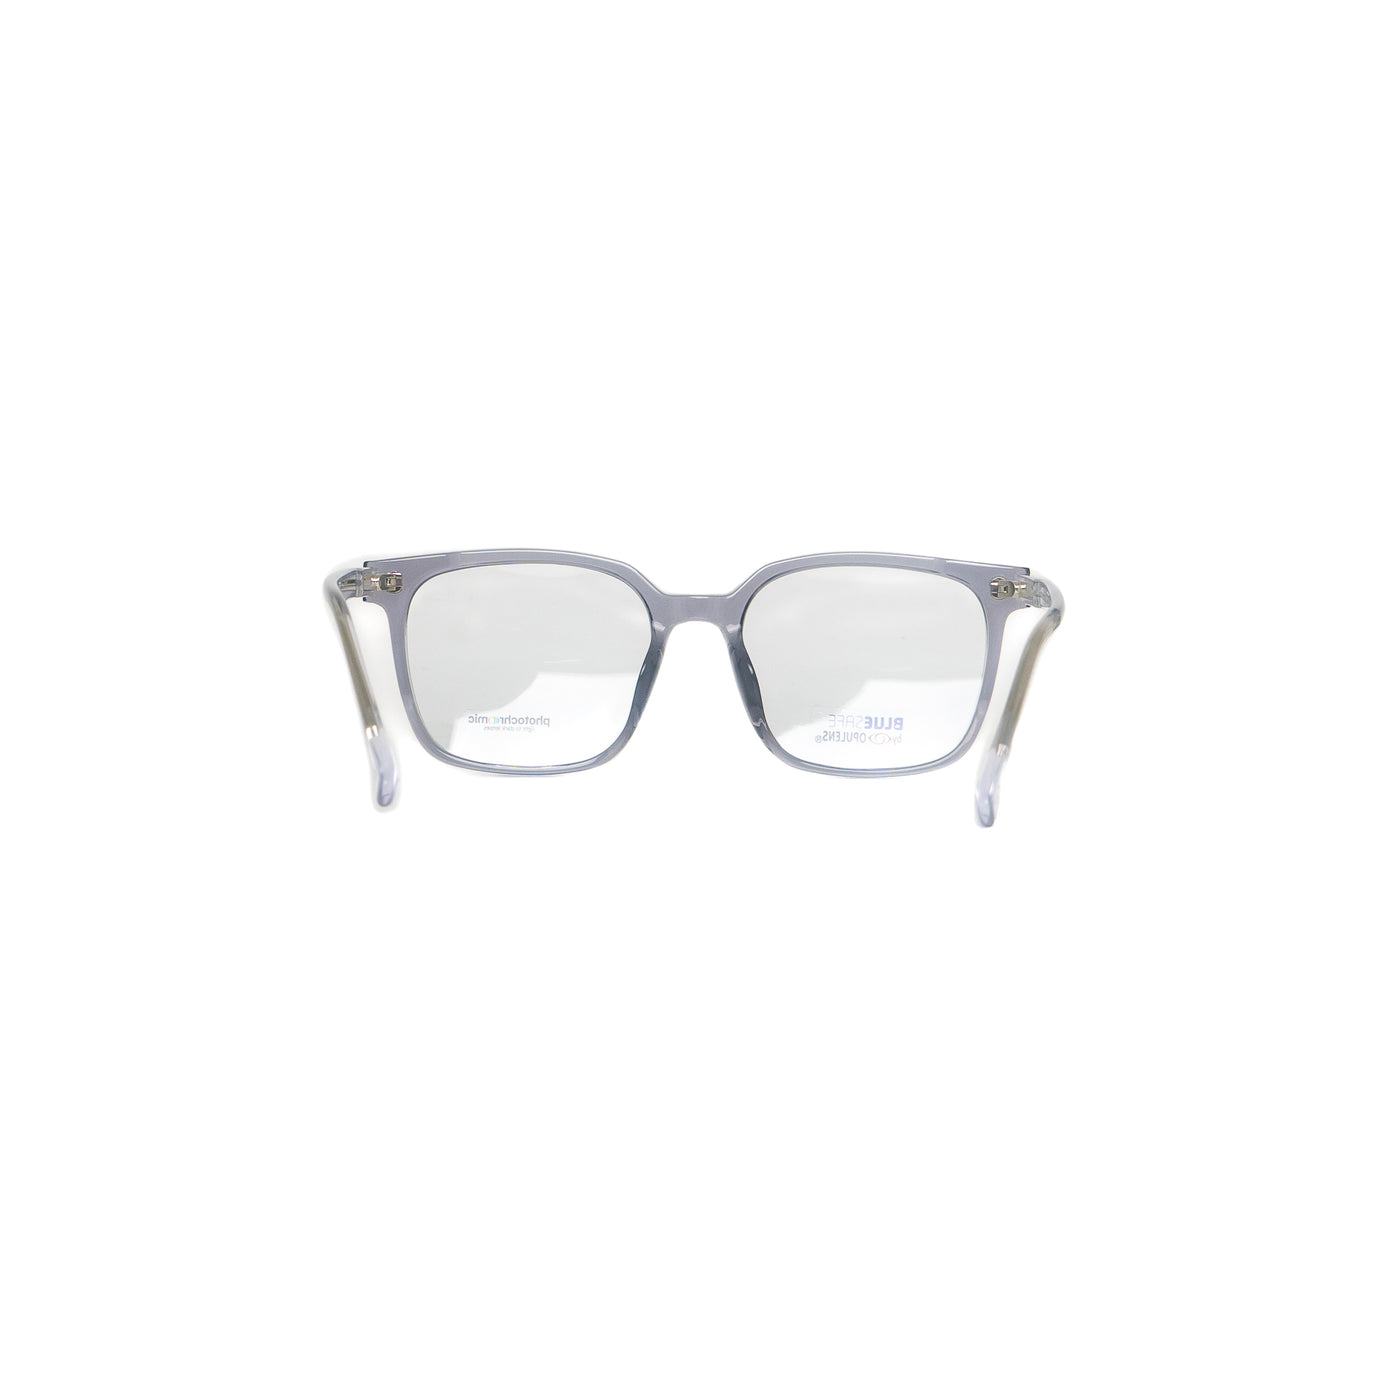 Tony Morgan TM60006C454PURP | Eyeglasses - Vision Express Optical Philippines